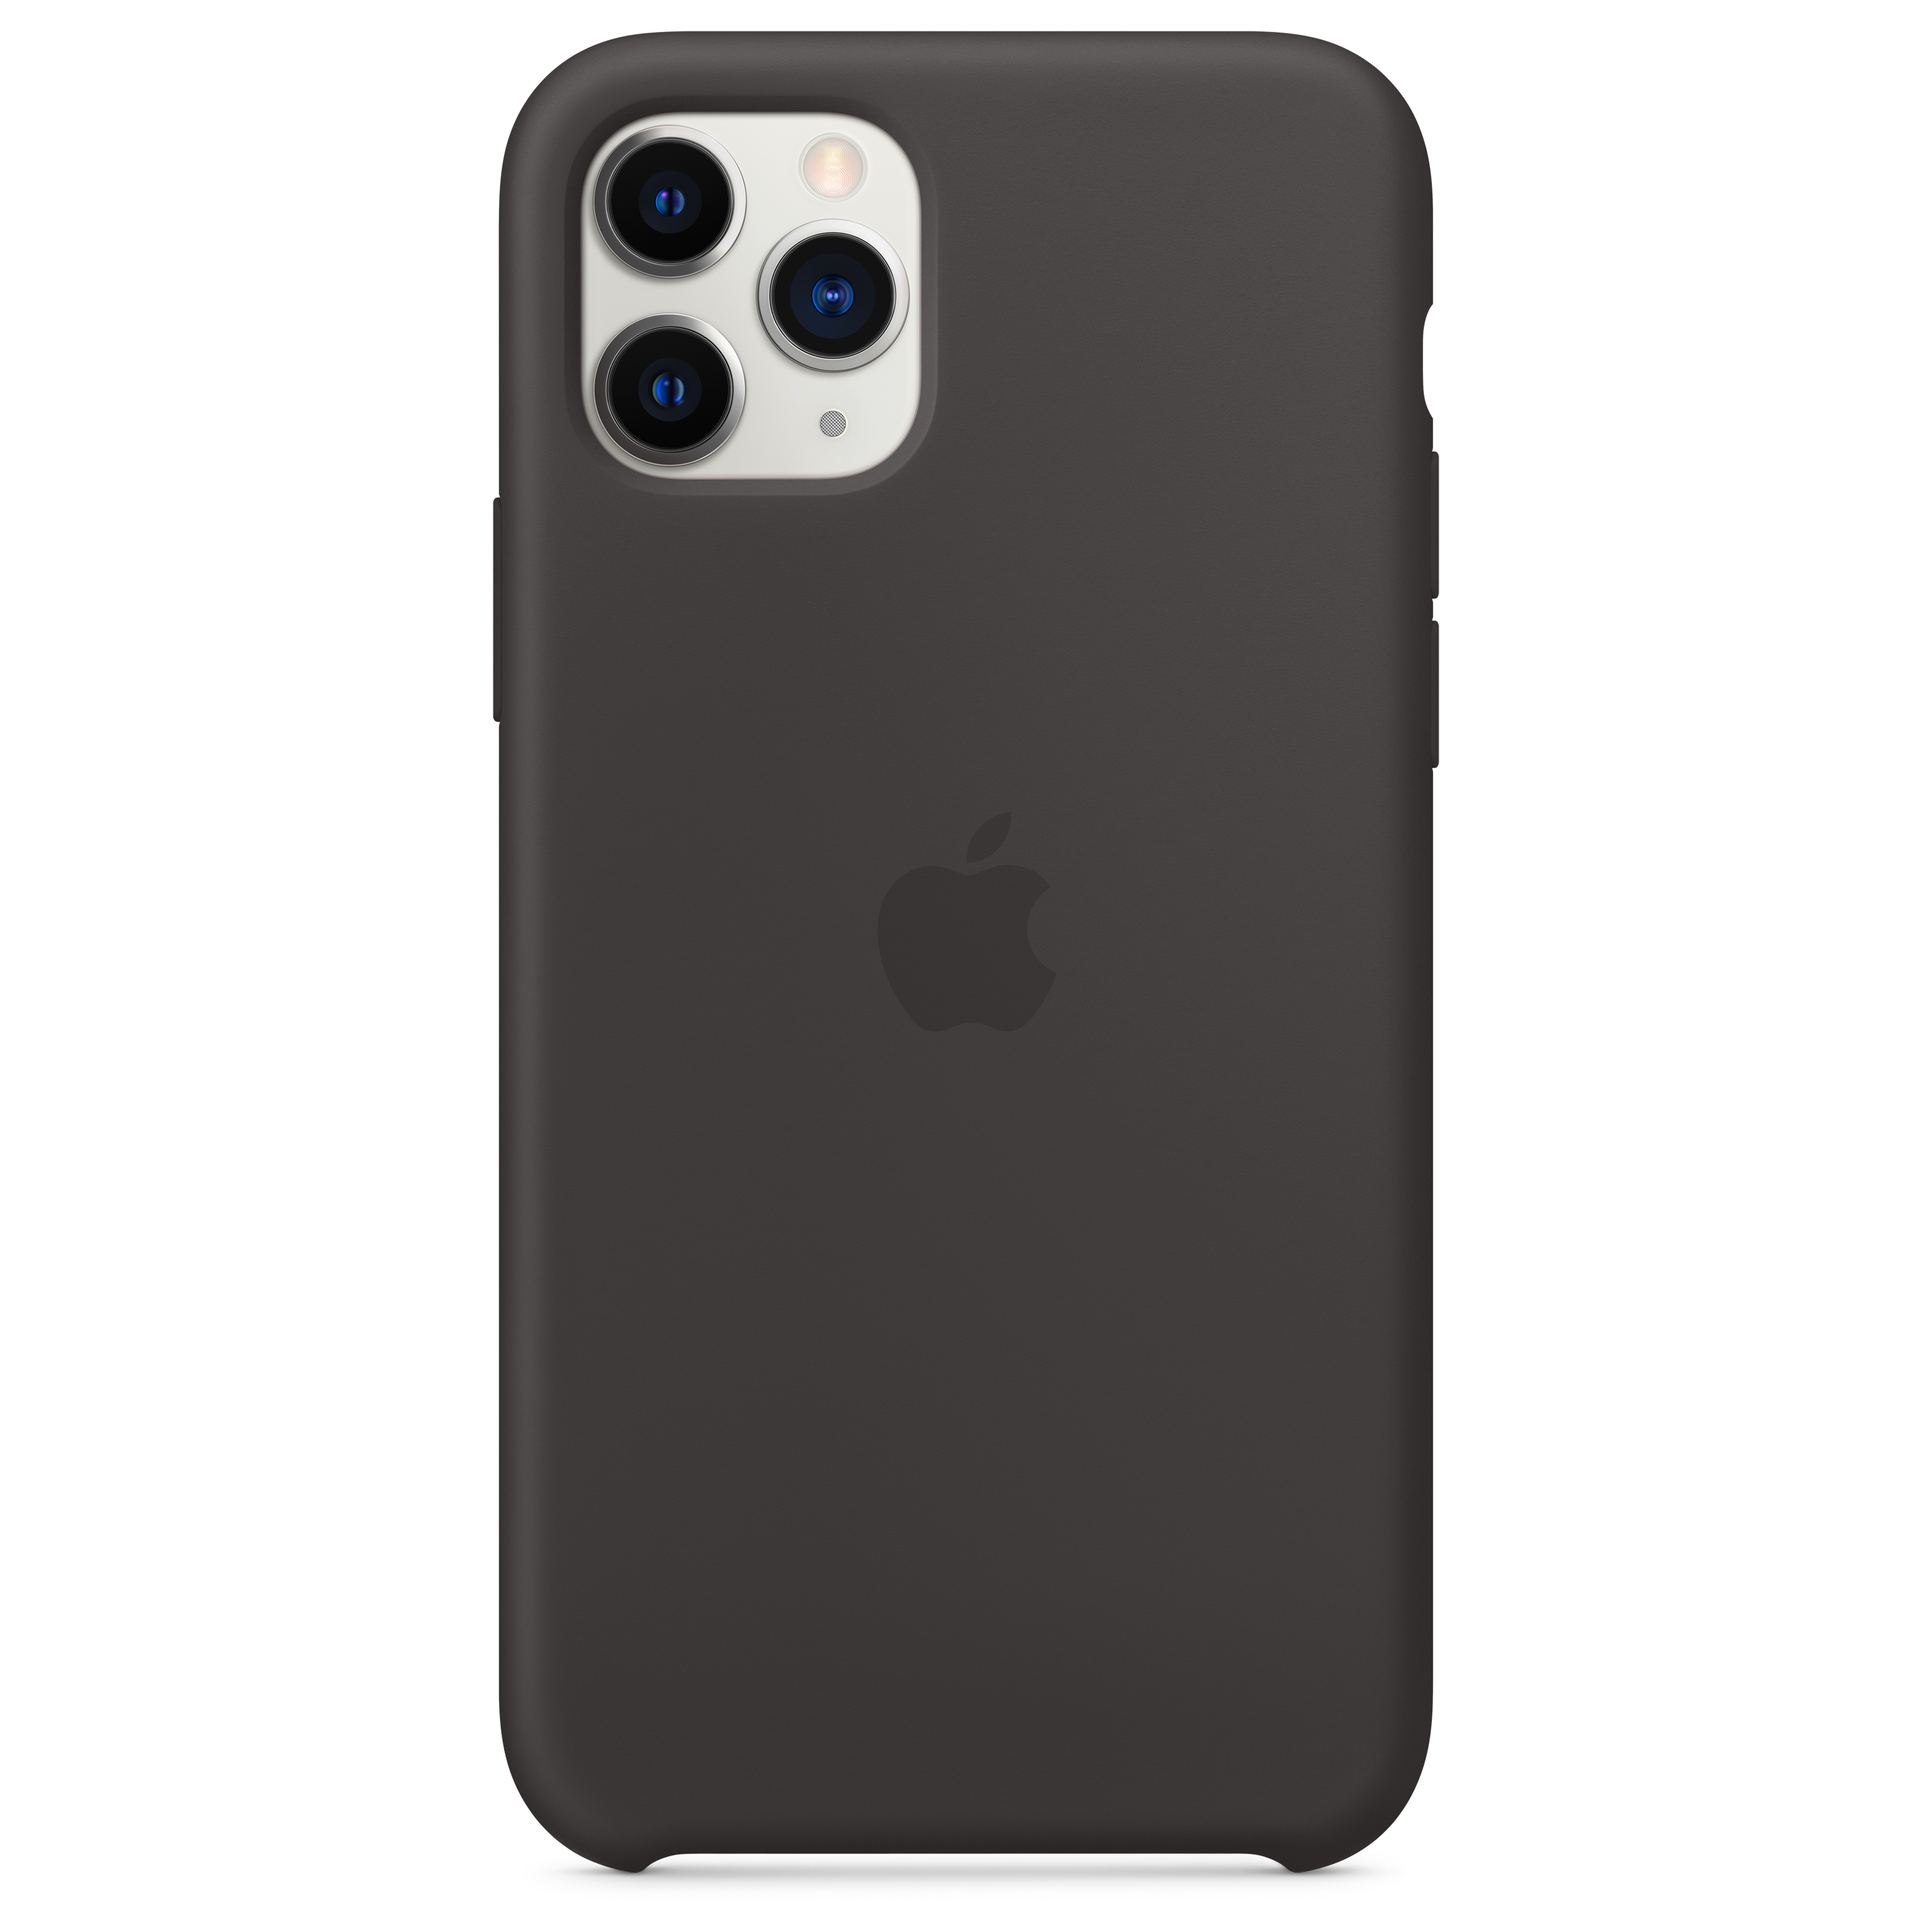 iPhone 11 Pro Silicone Case - Black - image 2 of 6